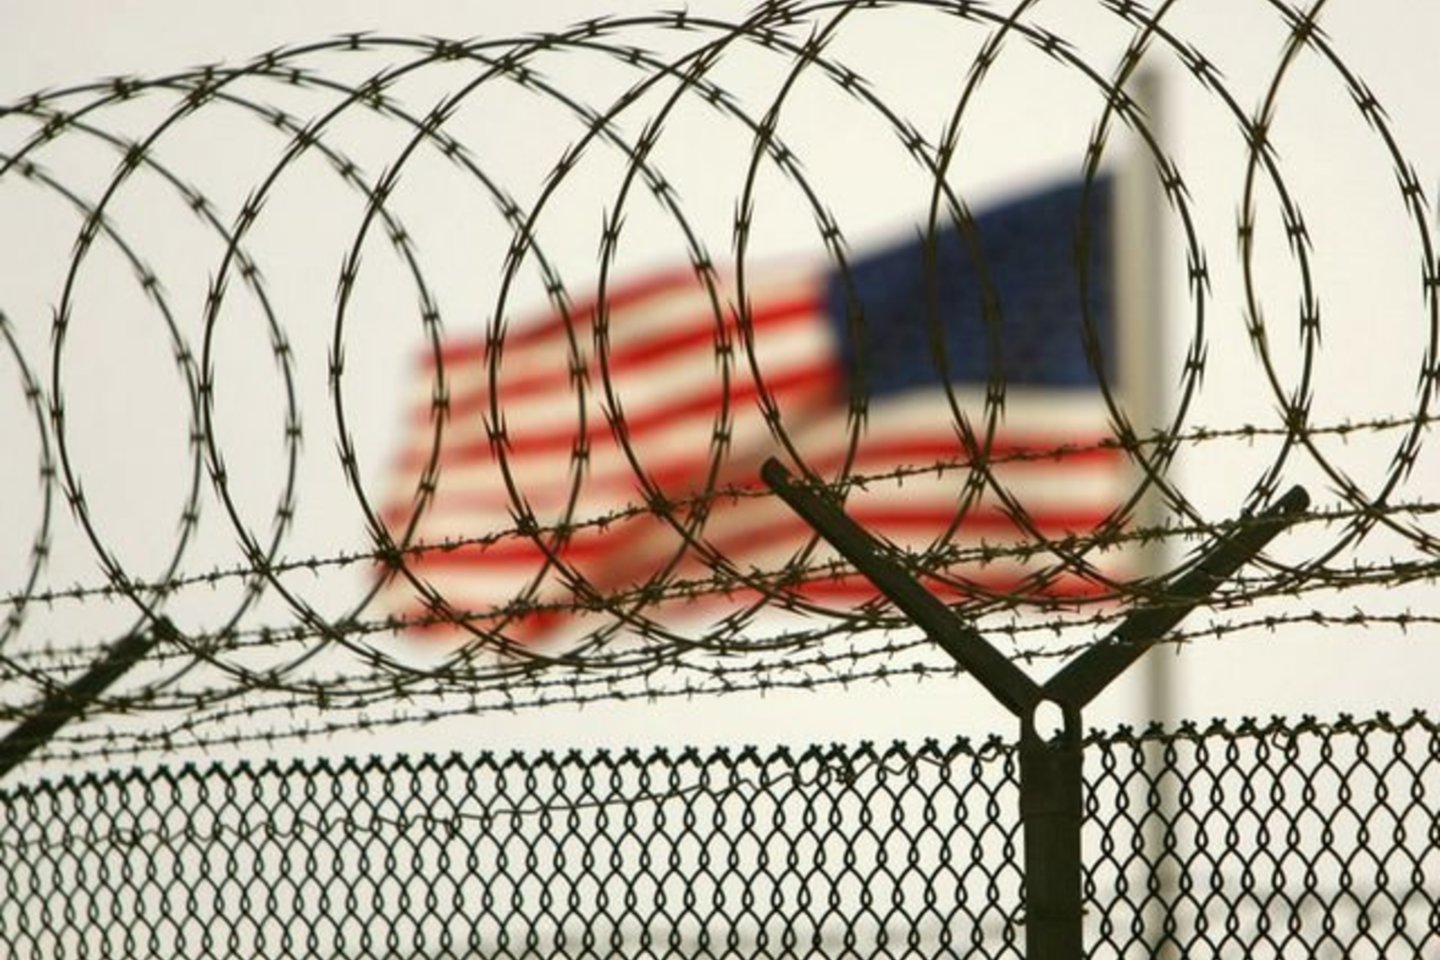 JAV kalėjimas.<br>Reuters